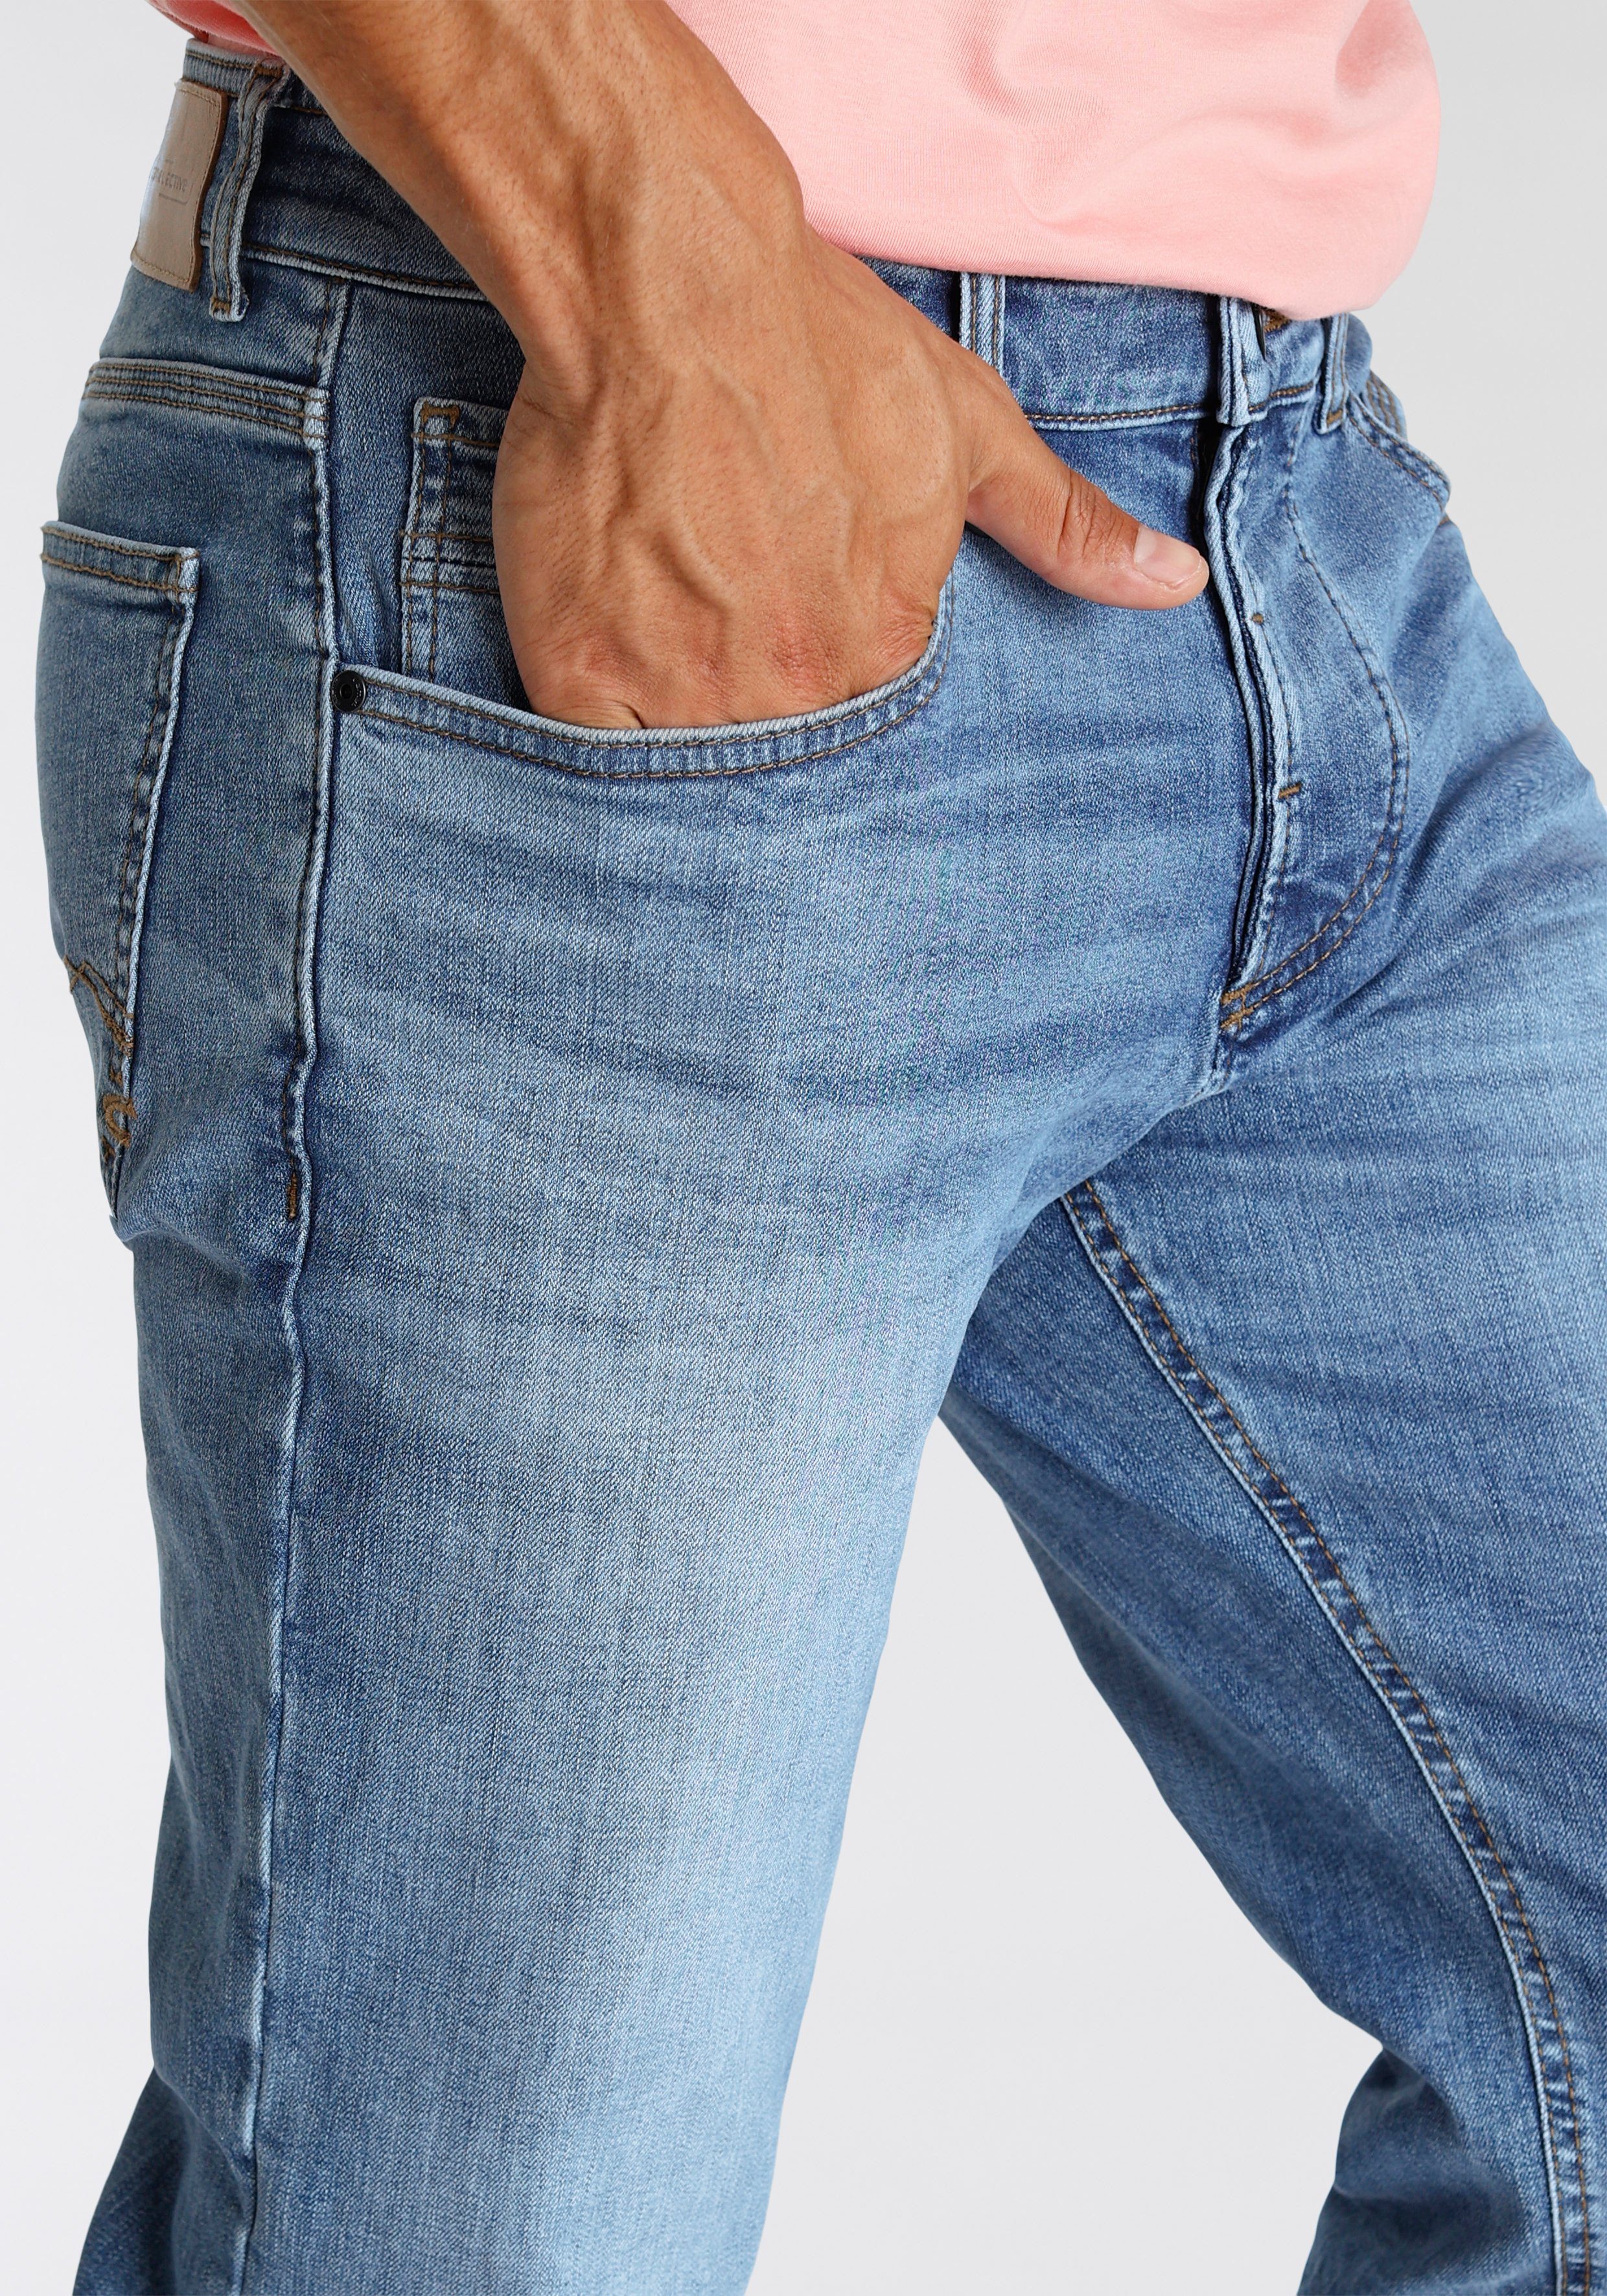 camel active 5-Pocket-Jeans WOODSTOCK ocean-blue